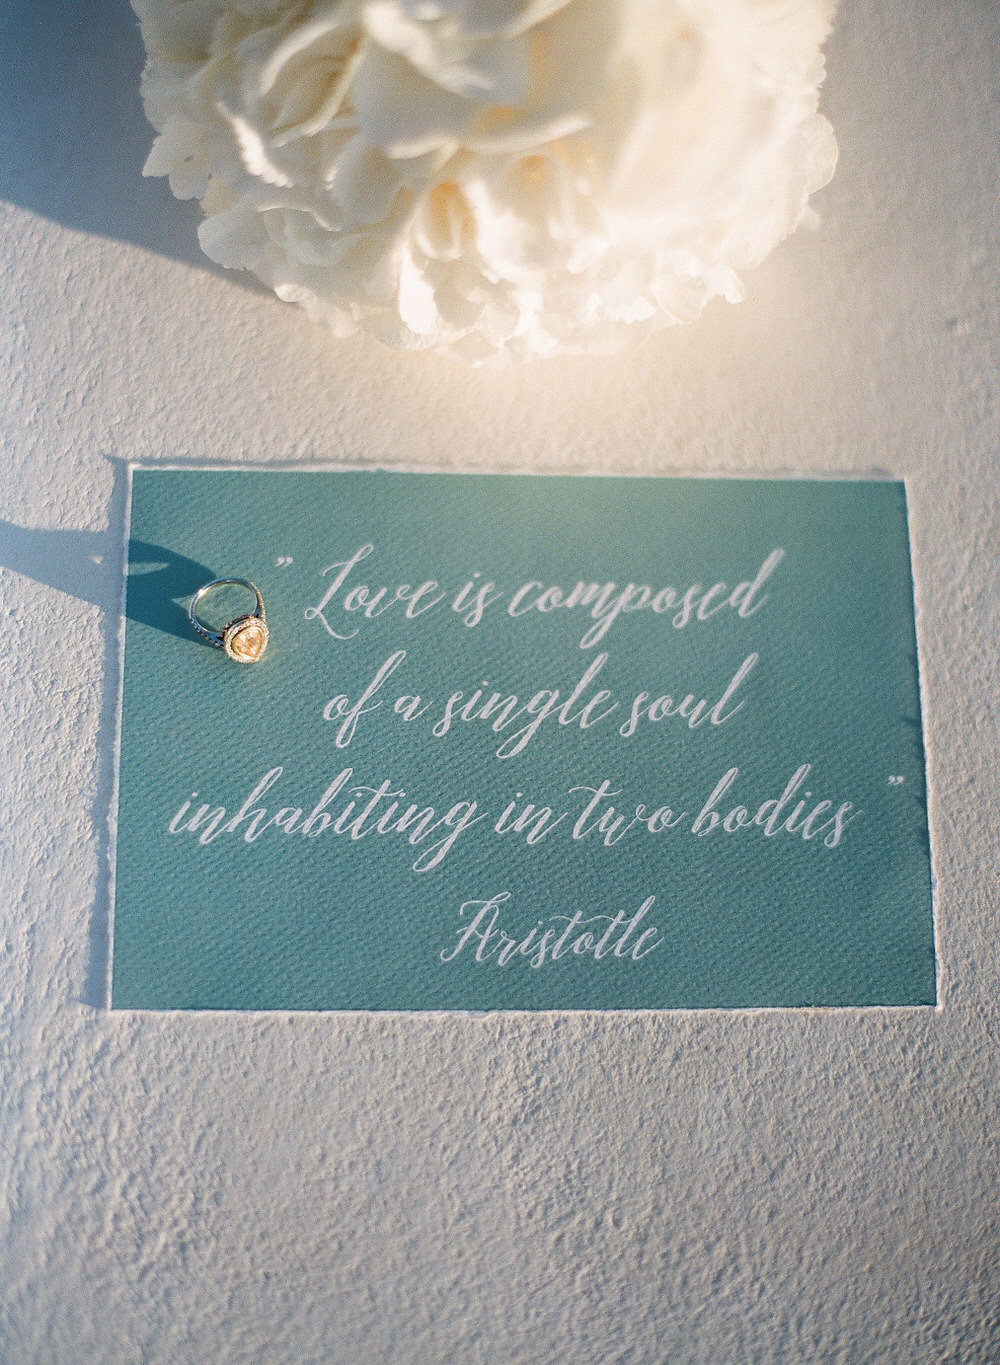 Aristotle love quote wedding sign